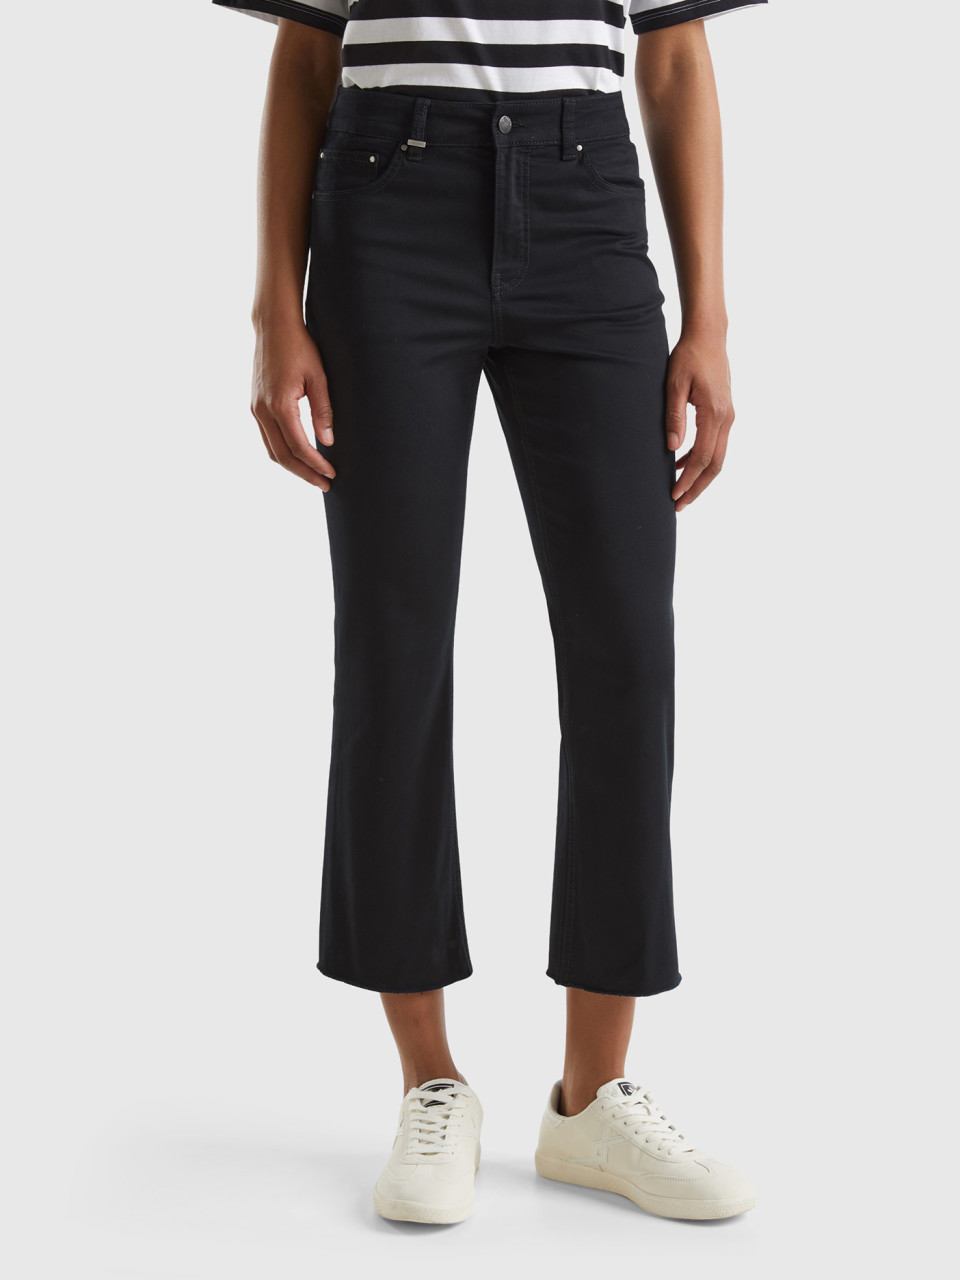 Benetton, Five-pocket Cropped Trousers, Black, Women